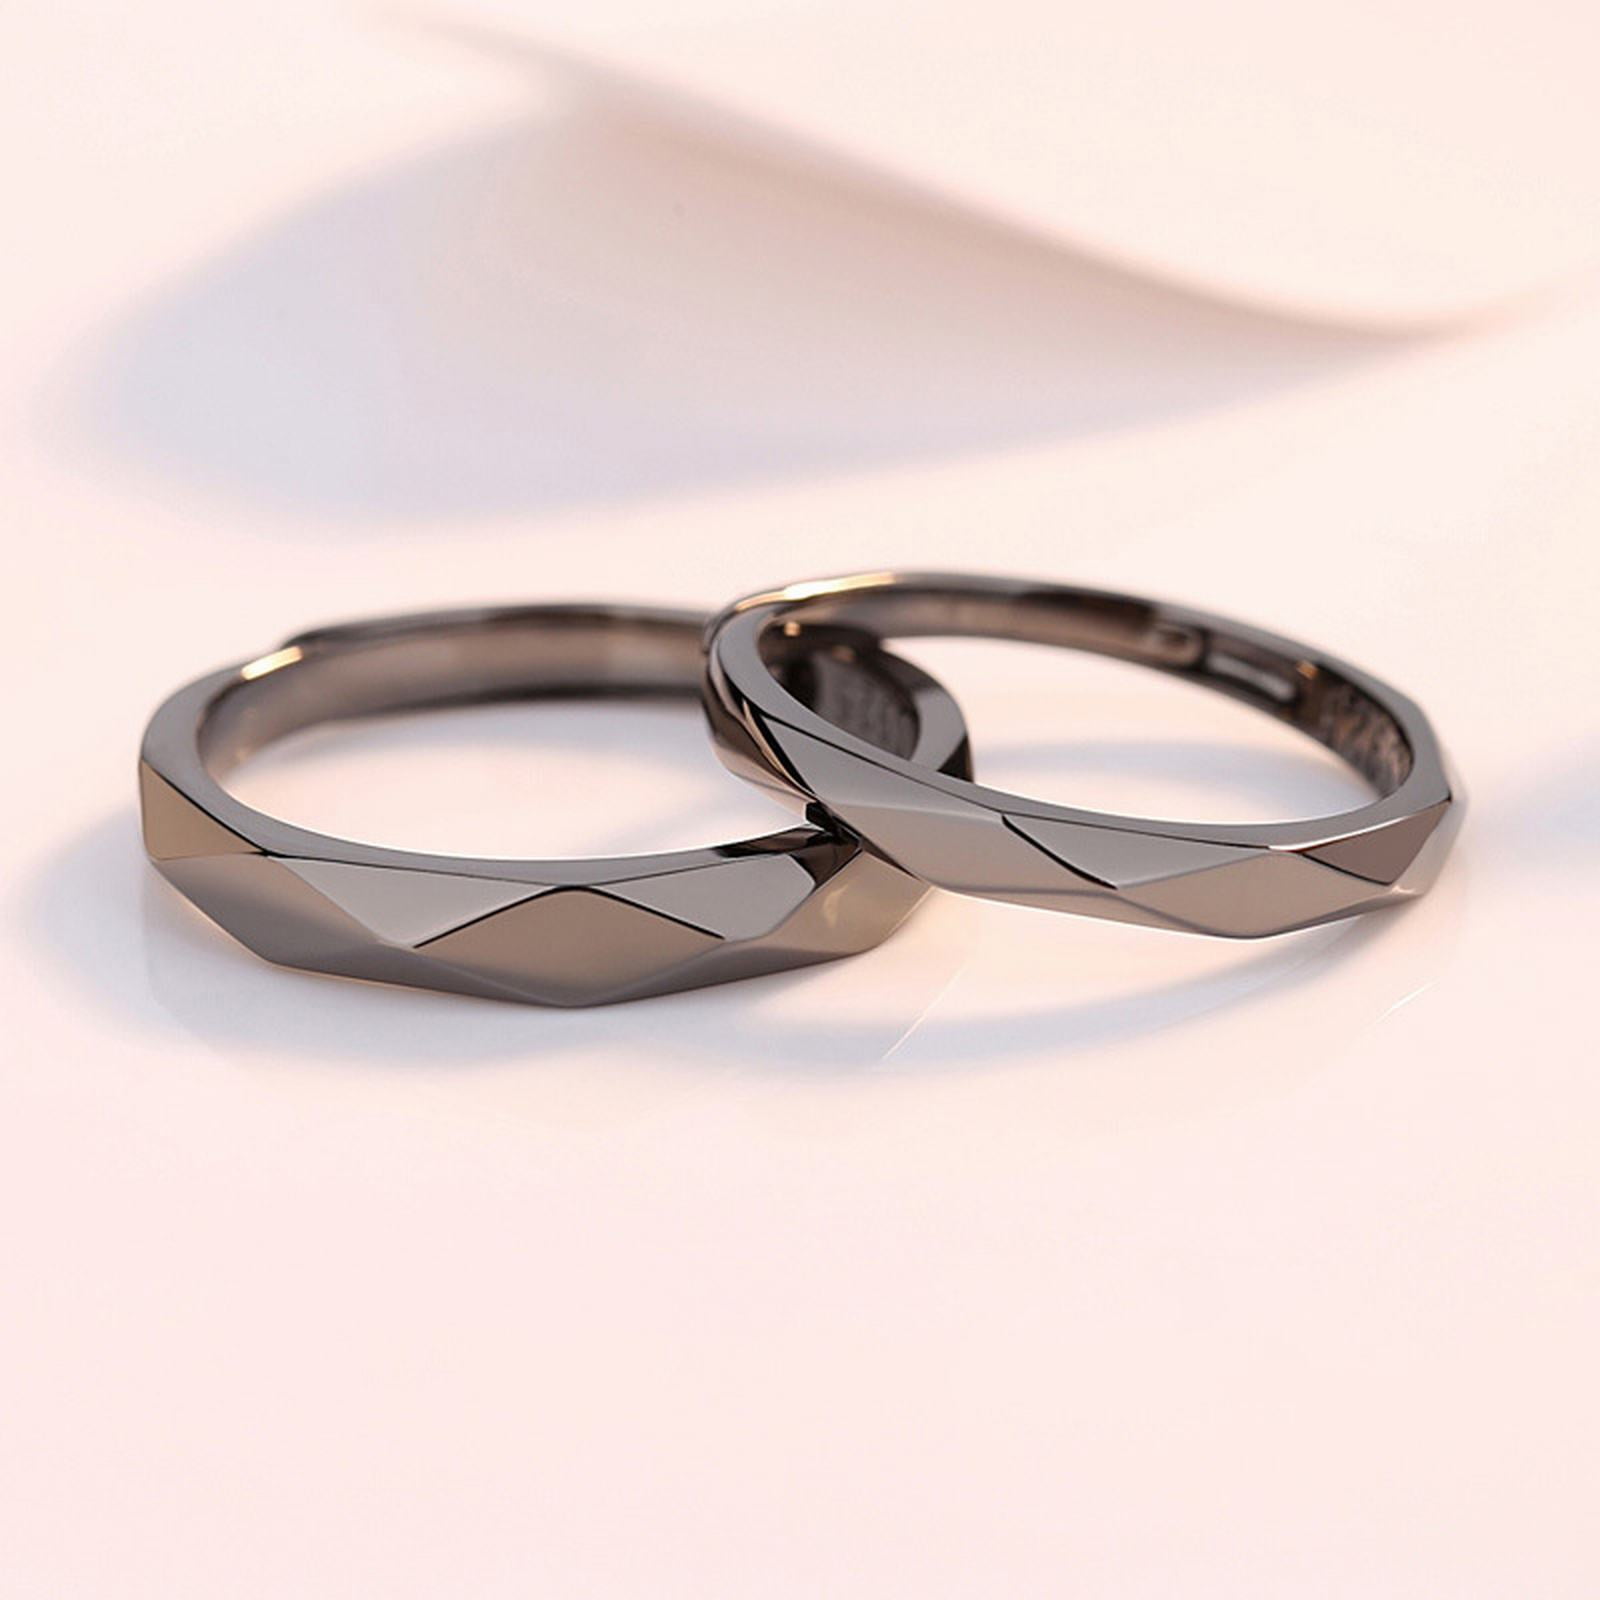 Buy Onyx Ring, Man Ring, 925 Silver Ring, Seal Ring, Boy Ring, Chavalier  Ring, Little Finger Ring,handmade,dark Ring,italian Jewel,made in Italy  Online in India - Etsy